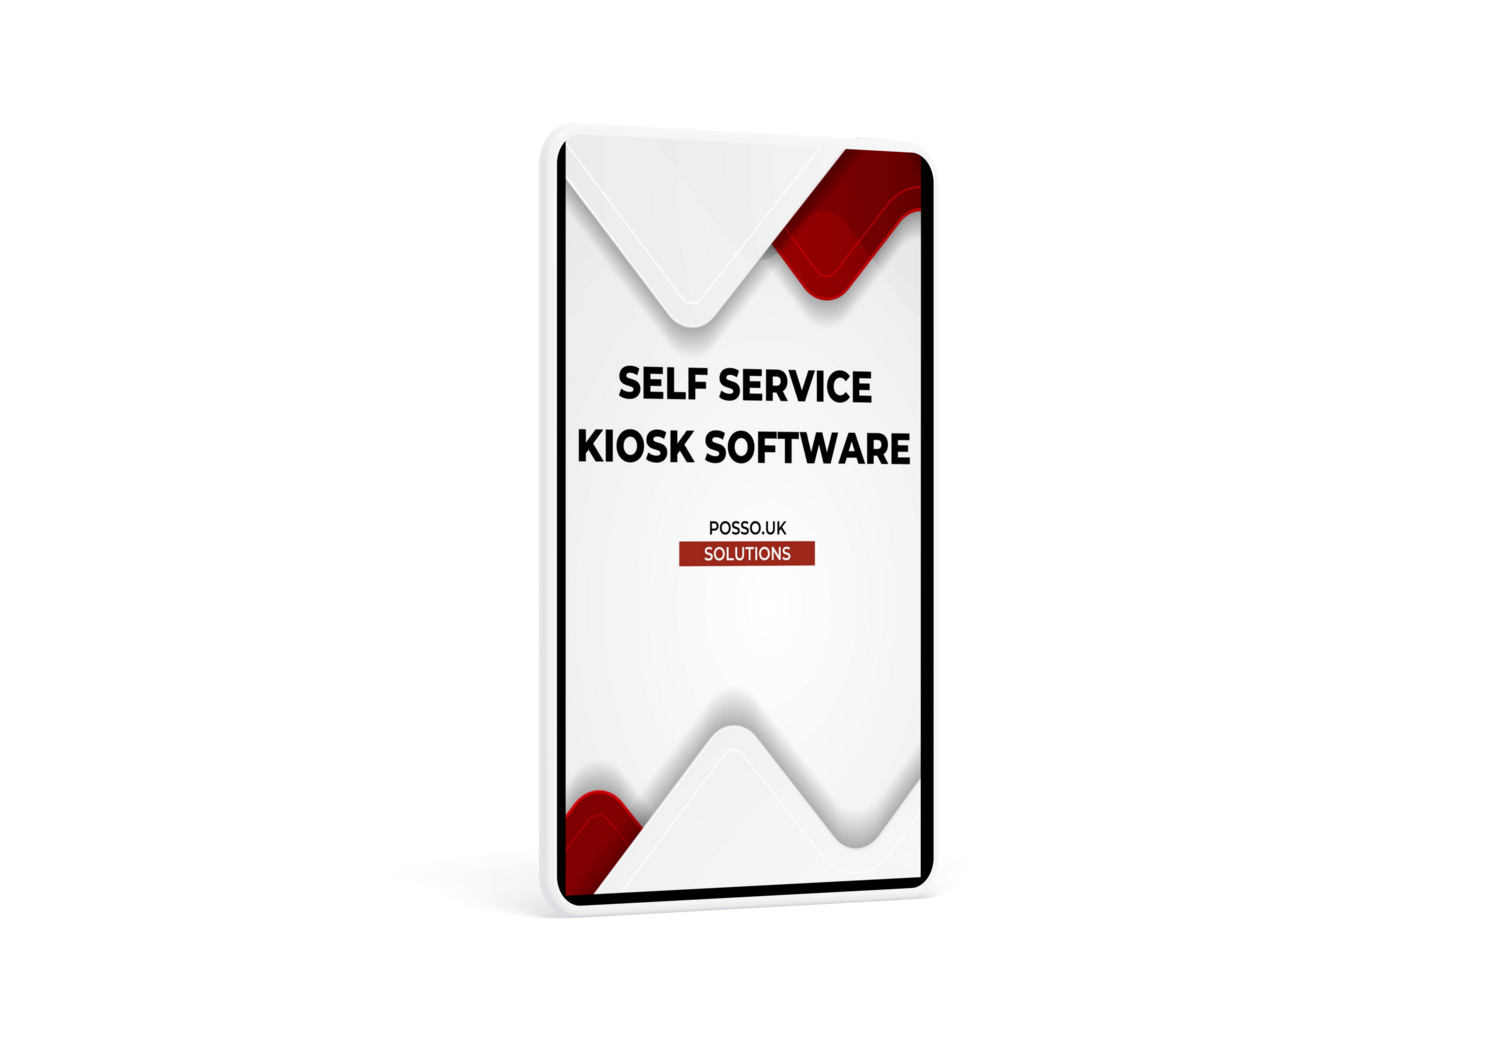 Self Service Kiosk Software